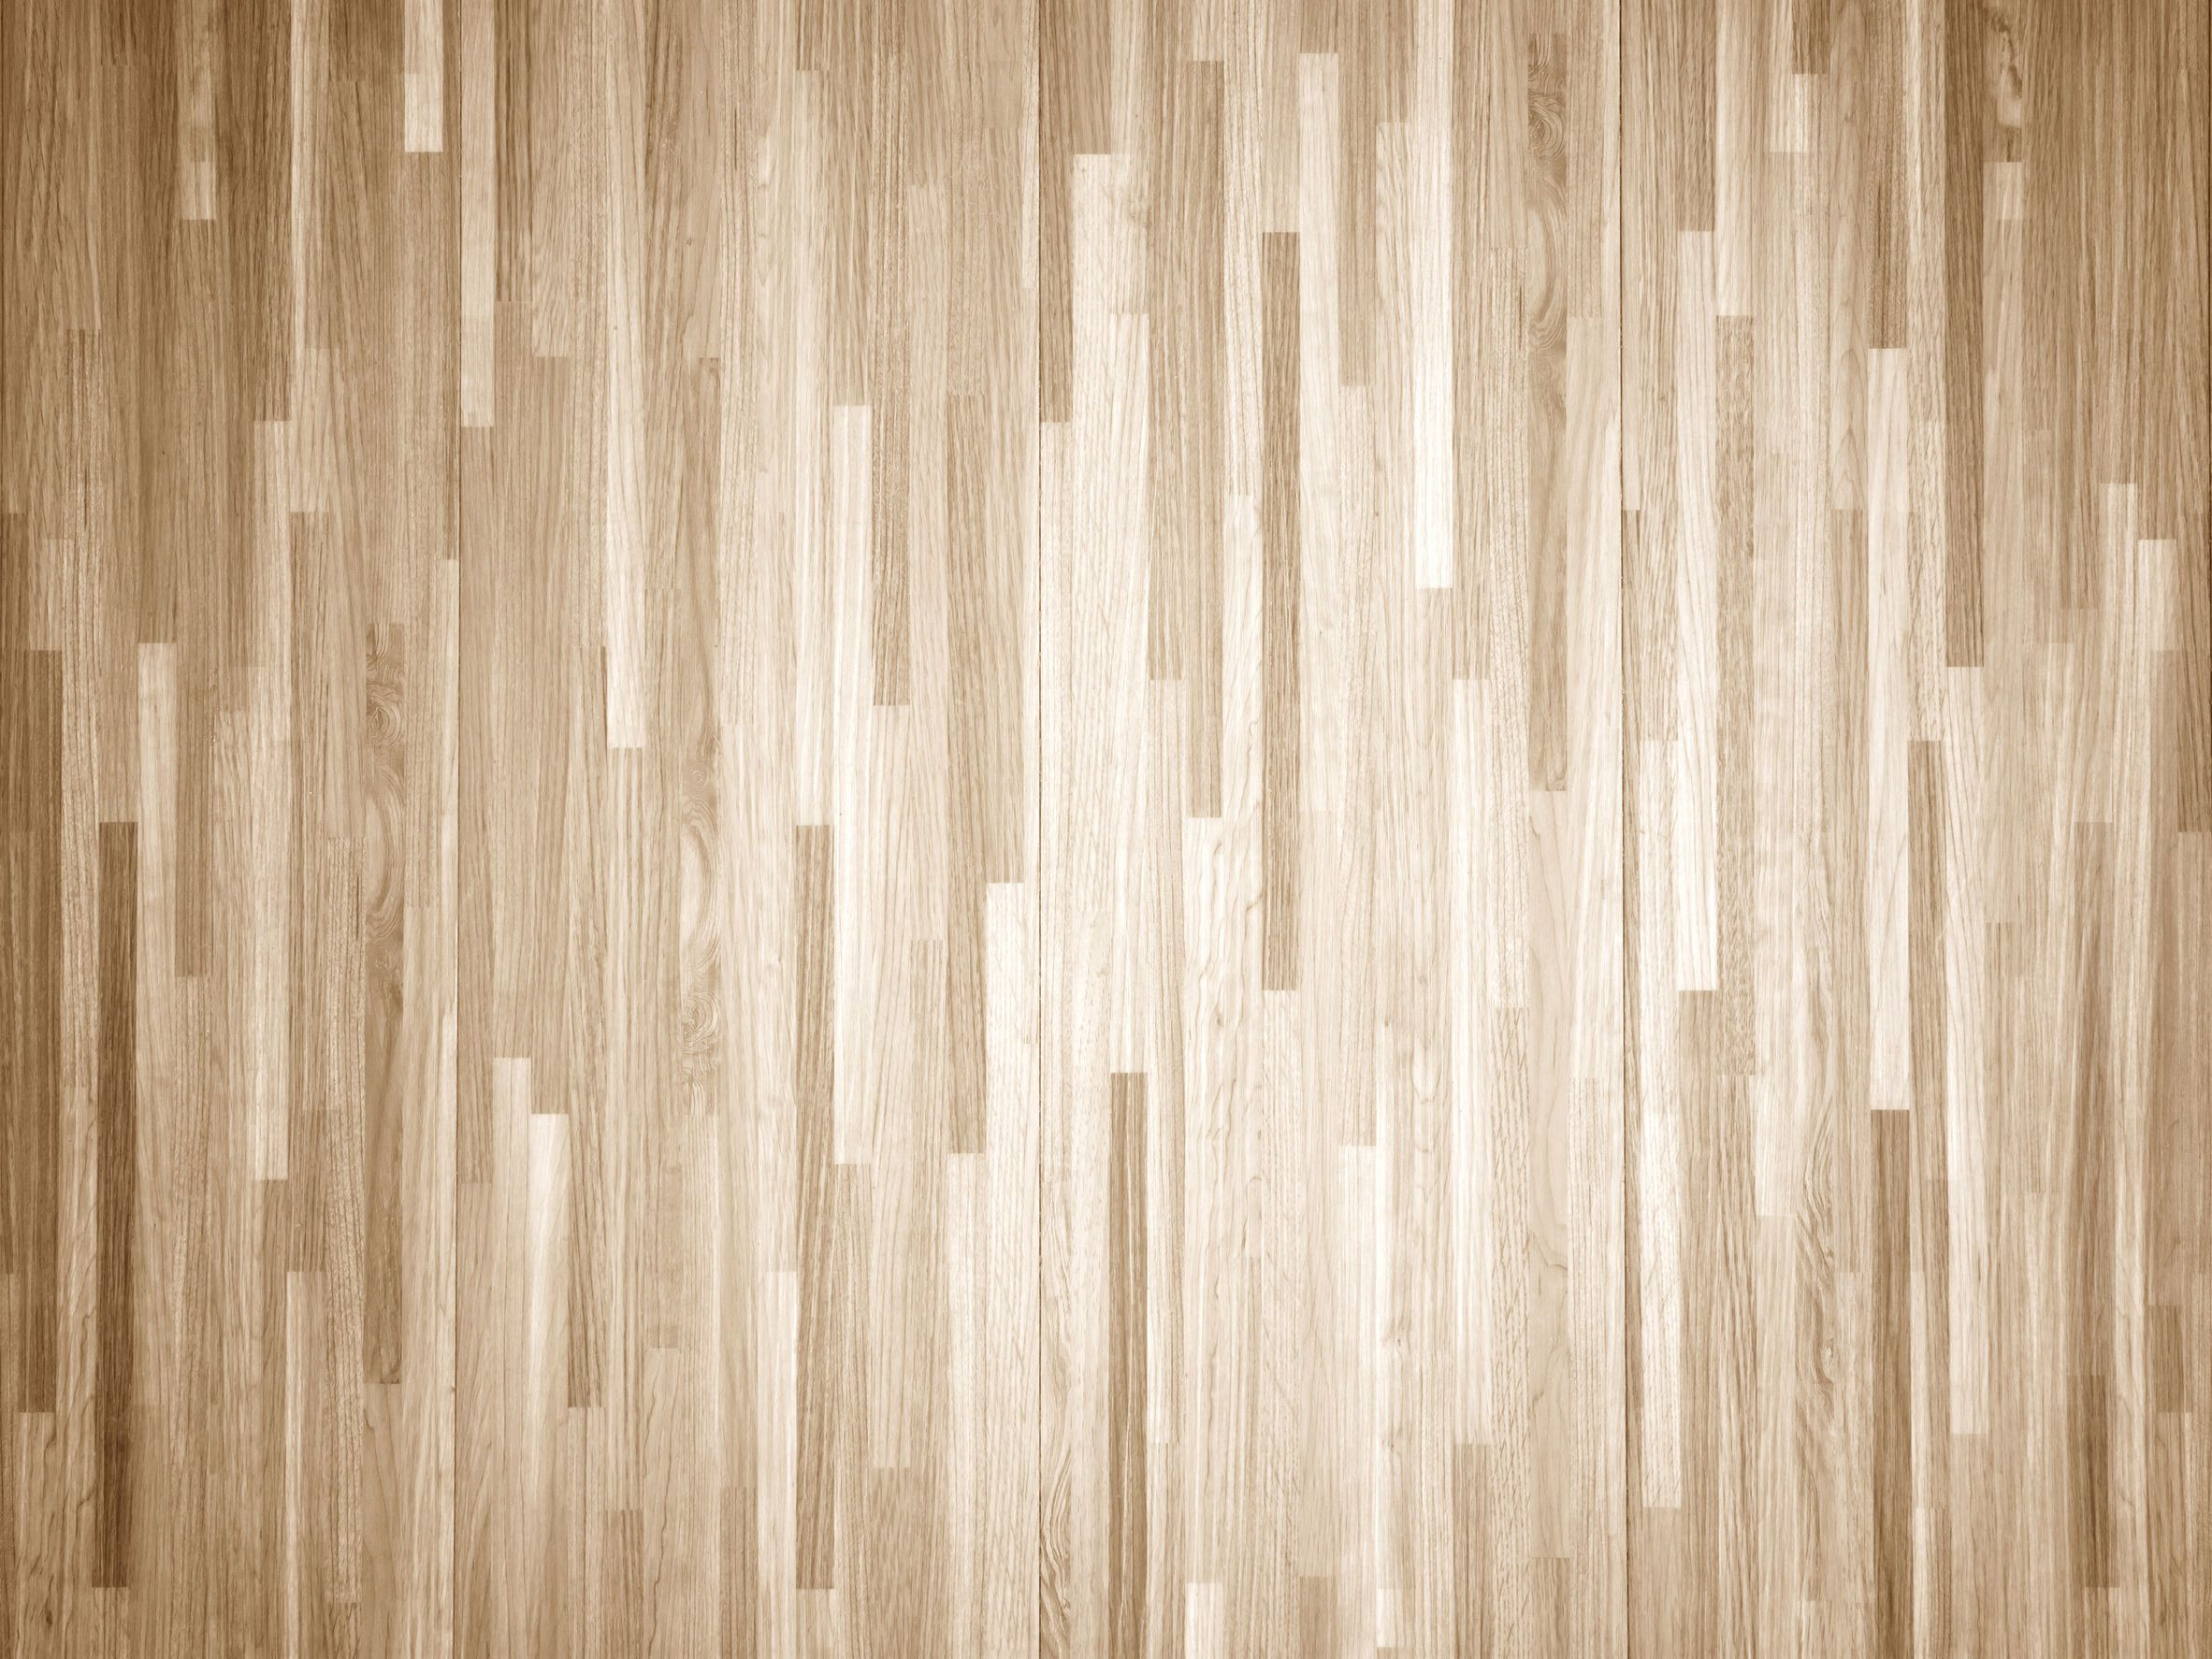 18 Stunning Refinish Hardwood Floors without Sanding Products 2024 free download refinish hardwood floors without sanding products of how to chemically strip wood floors woodfloordoctor com within you